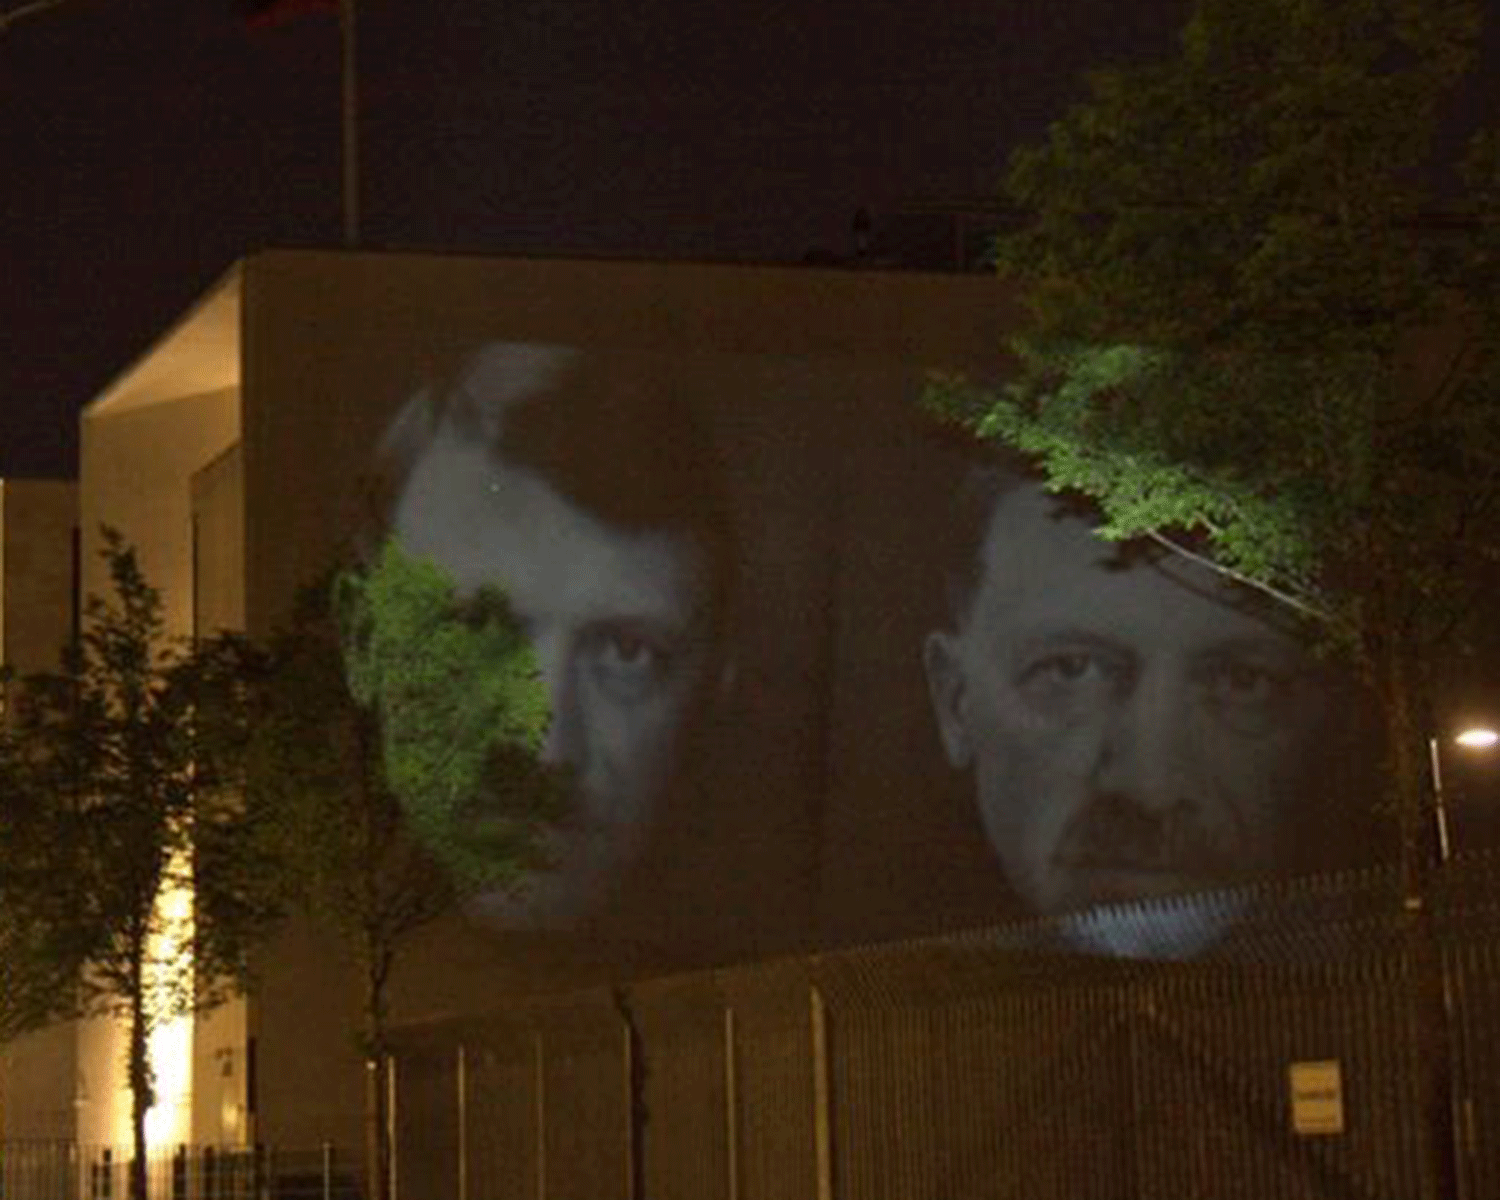 Turkish president Erdogan's face is projected alongside Nazi leader Adolf Hitler in Berlin